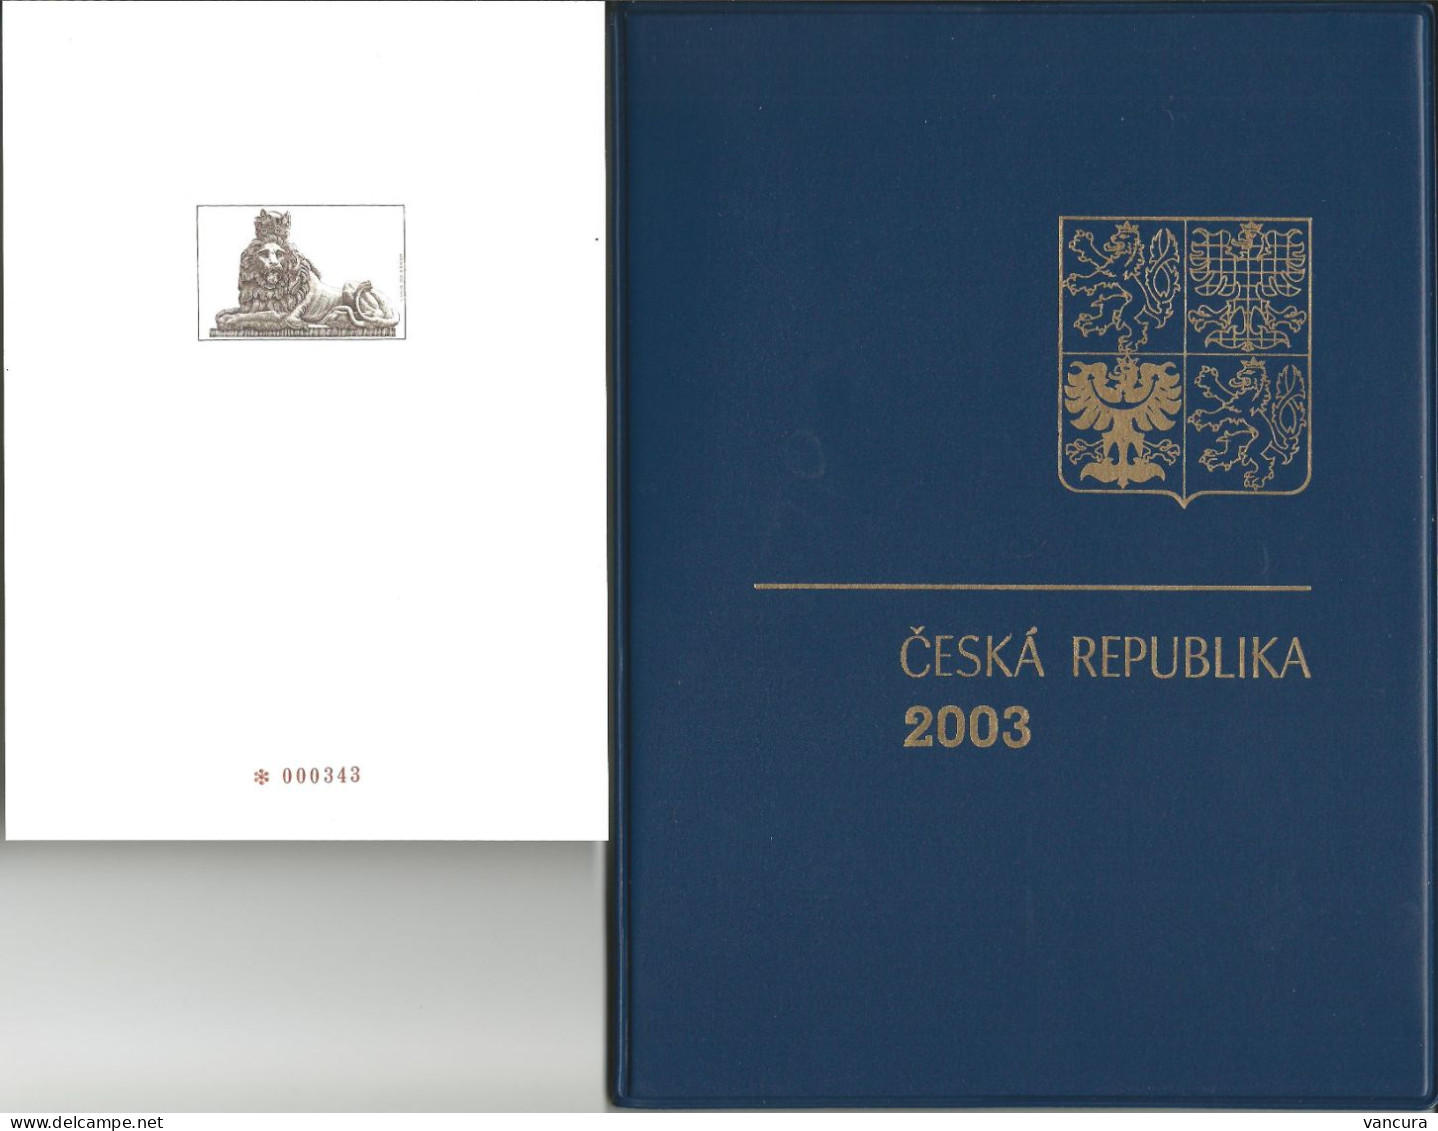 Czech Republic Year Book 2003 (with blackprint)